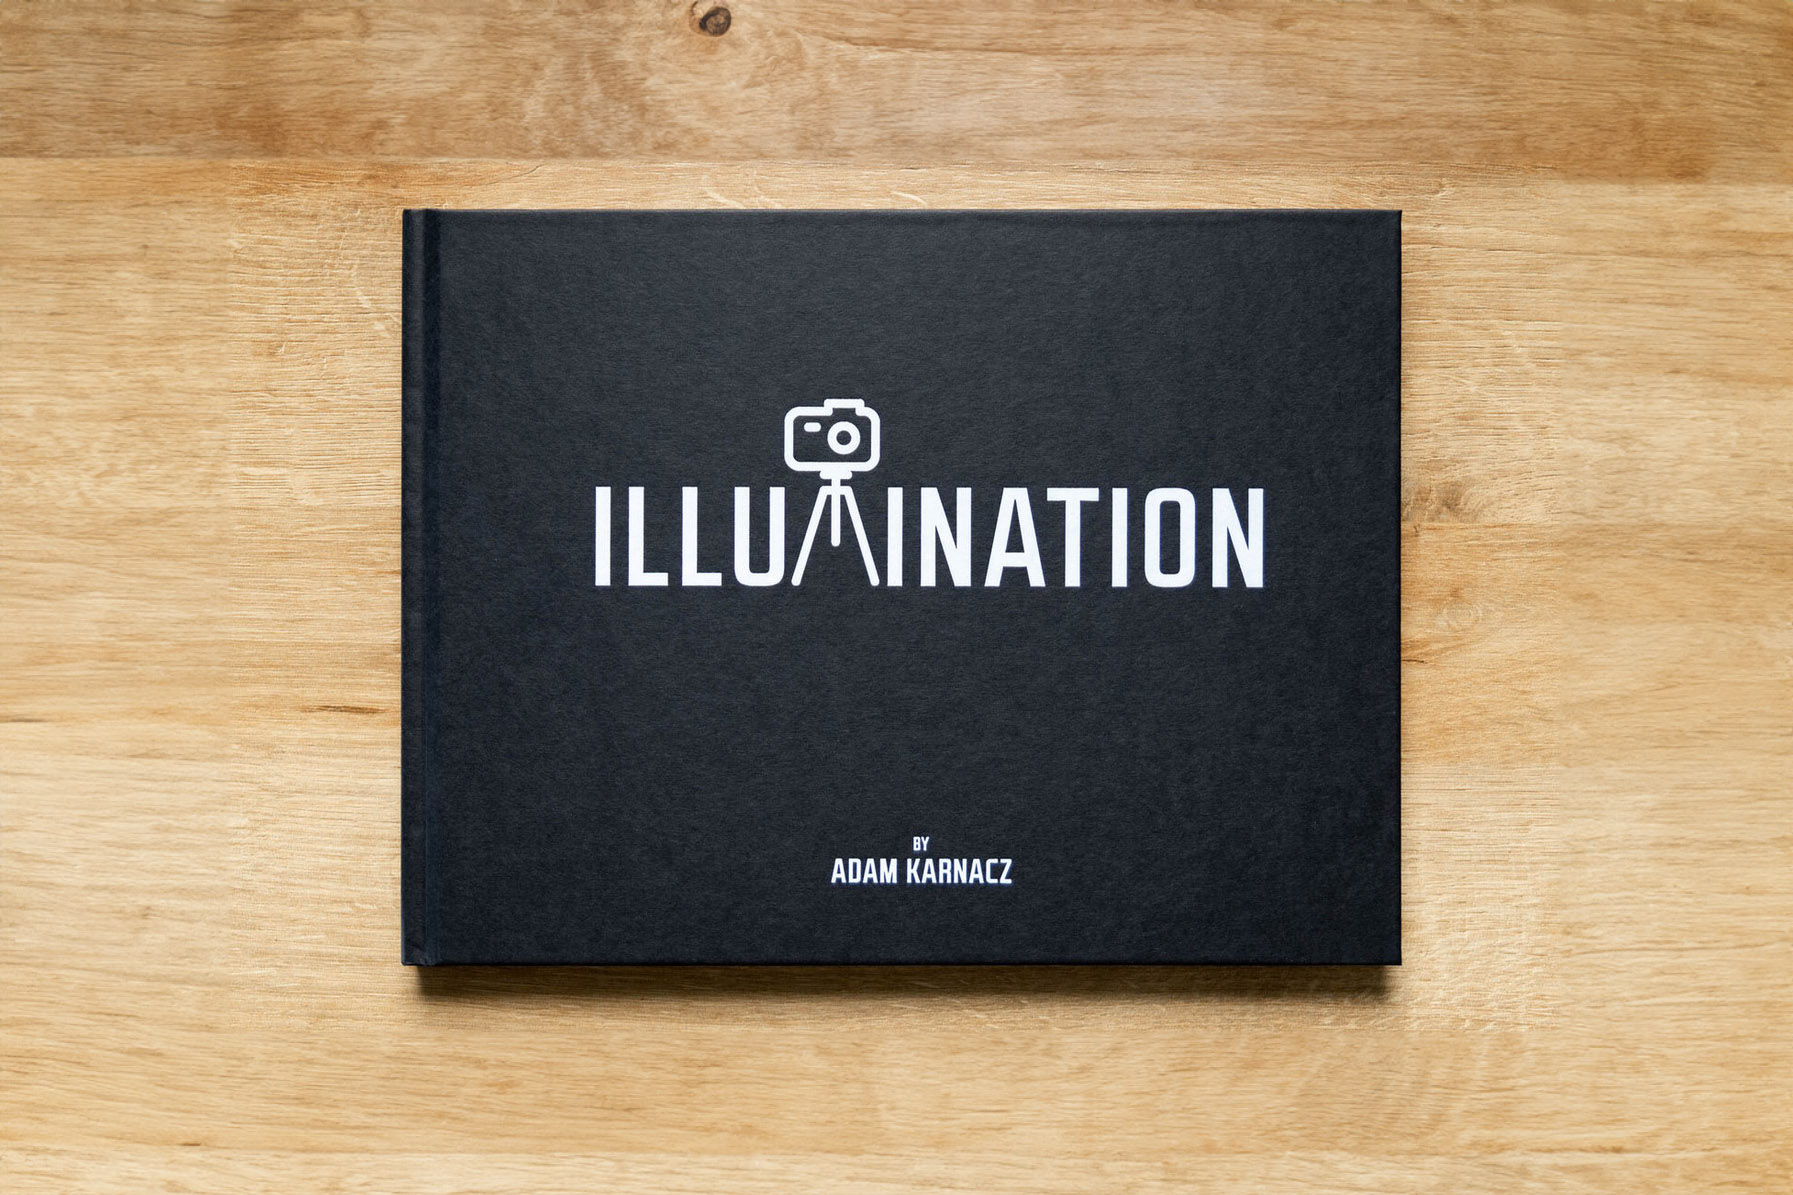 Review of “Illumination” by Adam Karnacz